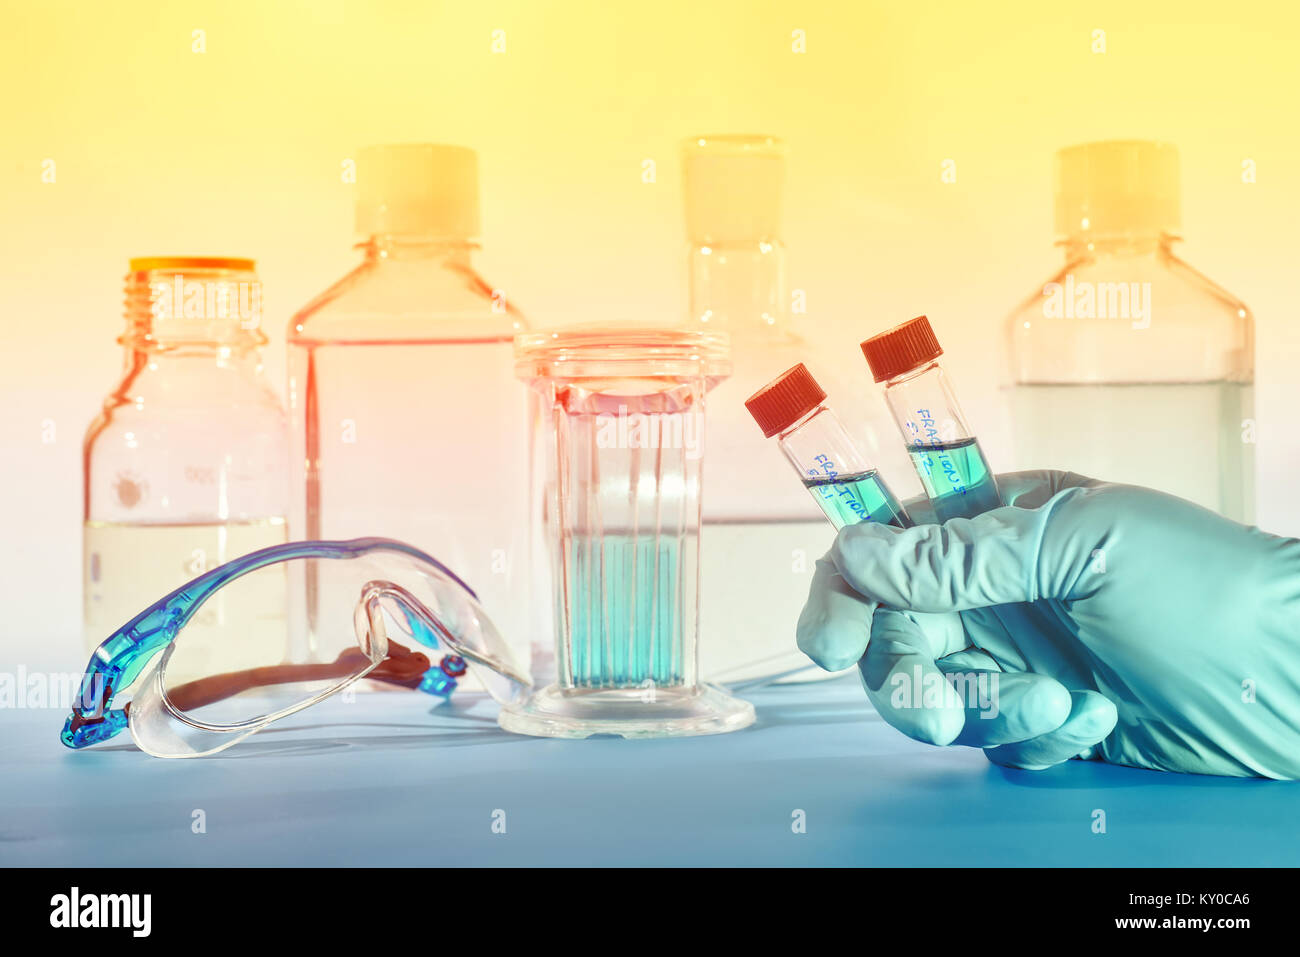 Two liquid samples in plastic vials in the hand of female scientist, scientific background in blue and orange Stock Photo